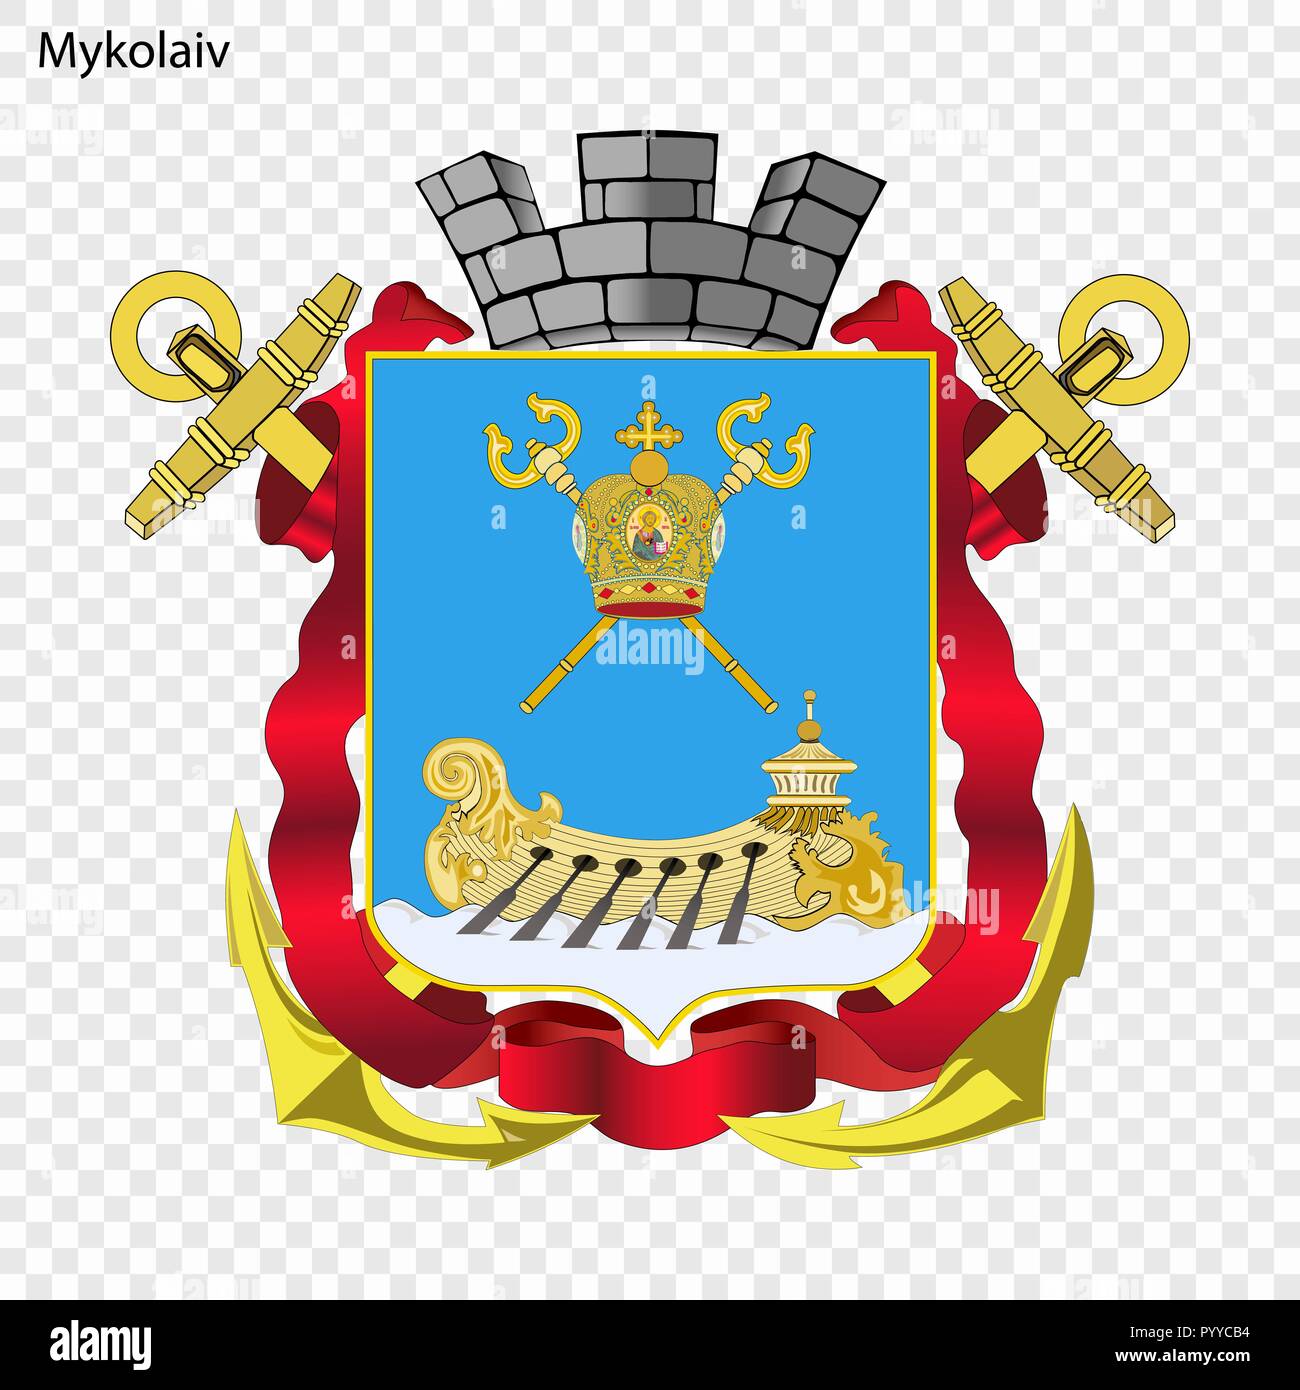 Emblem of Mykolaiv. City of Ukraine. Vector illustration Stock Vector